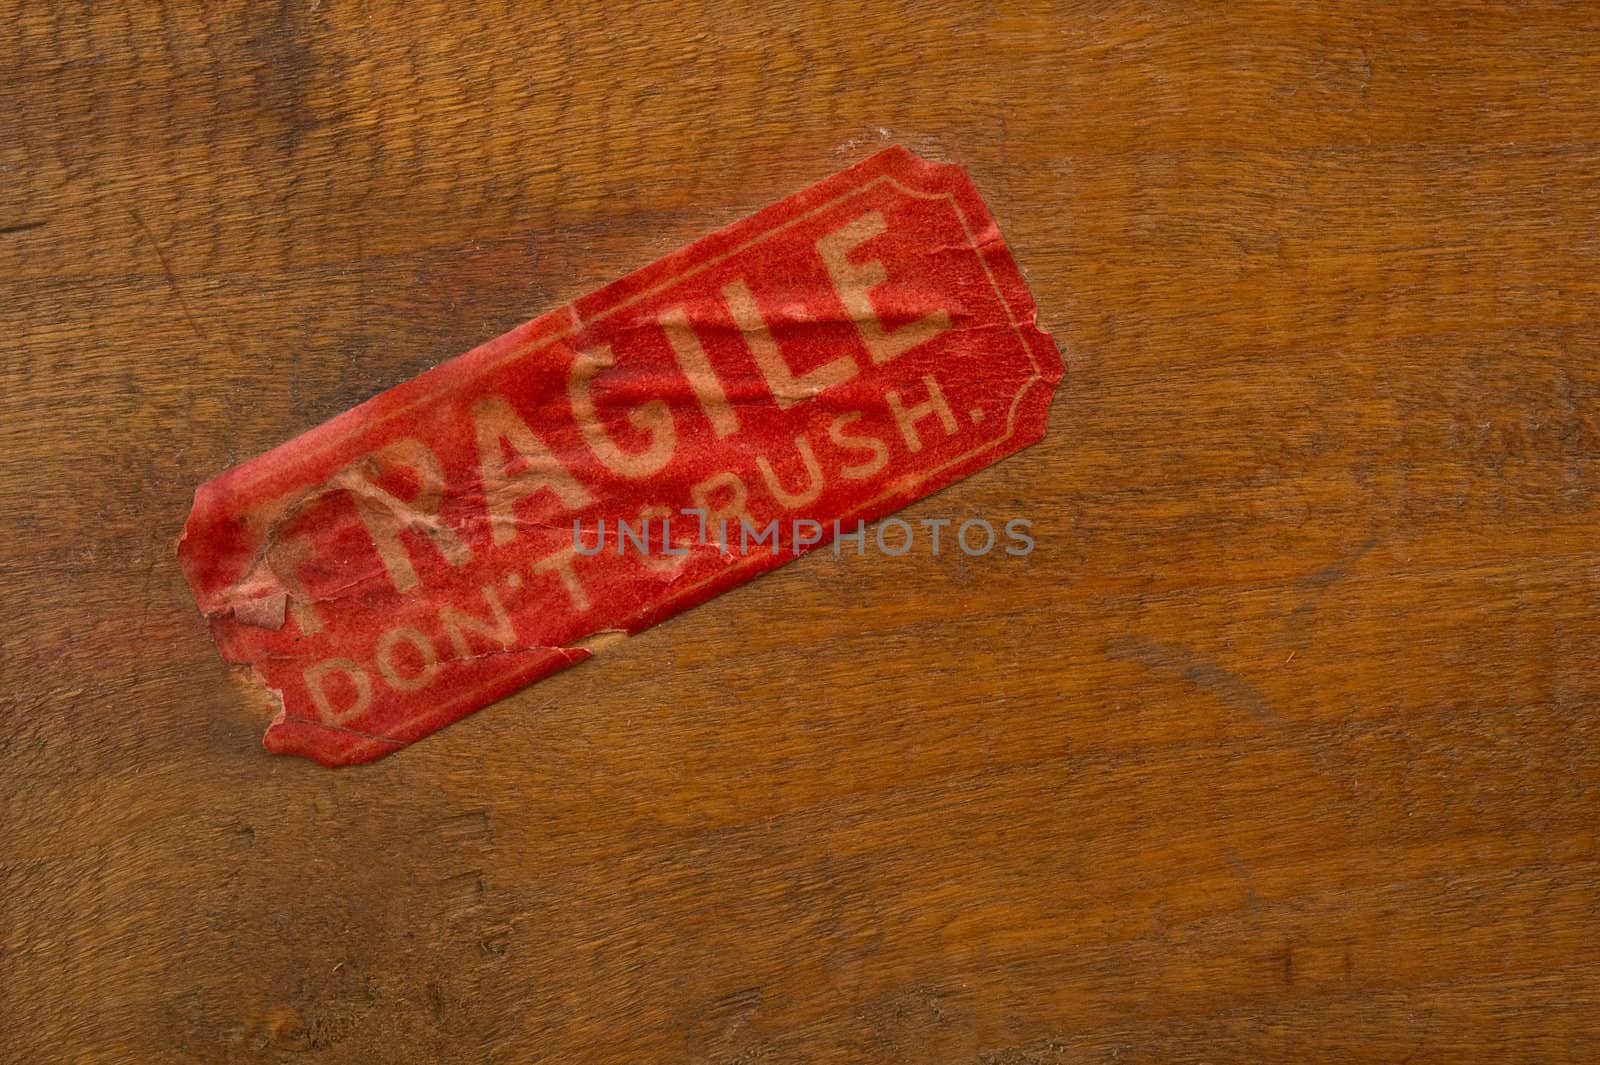 Image of an antiqued fragile label on wood background